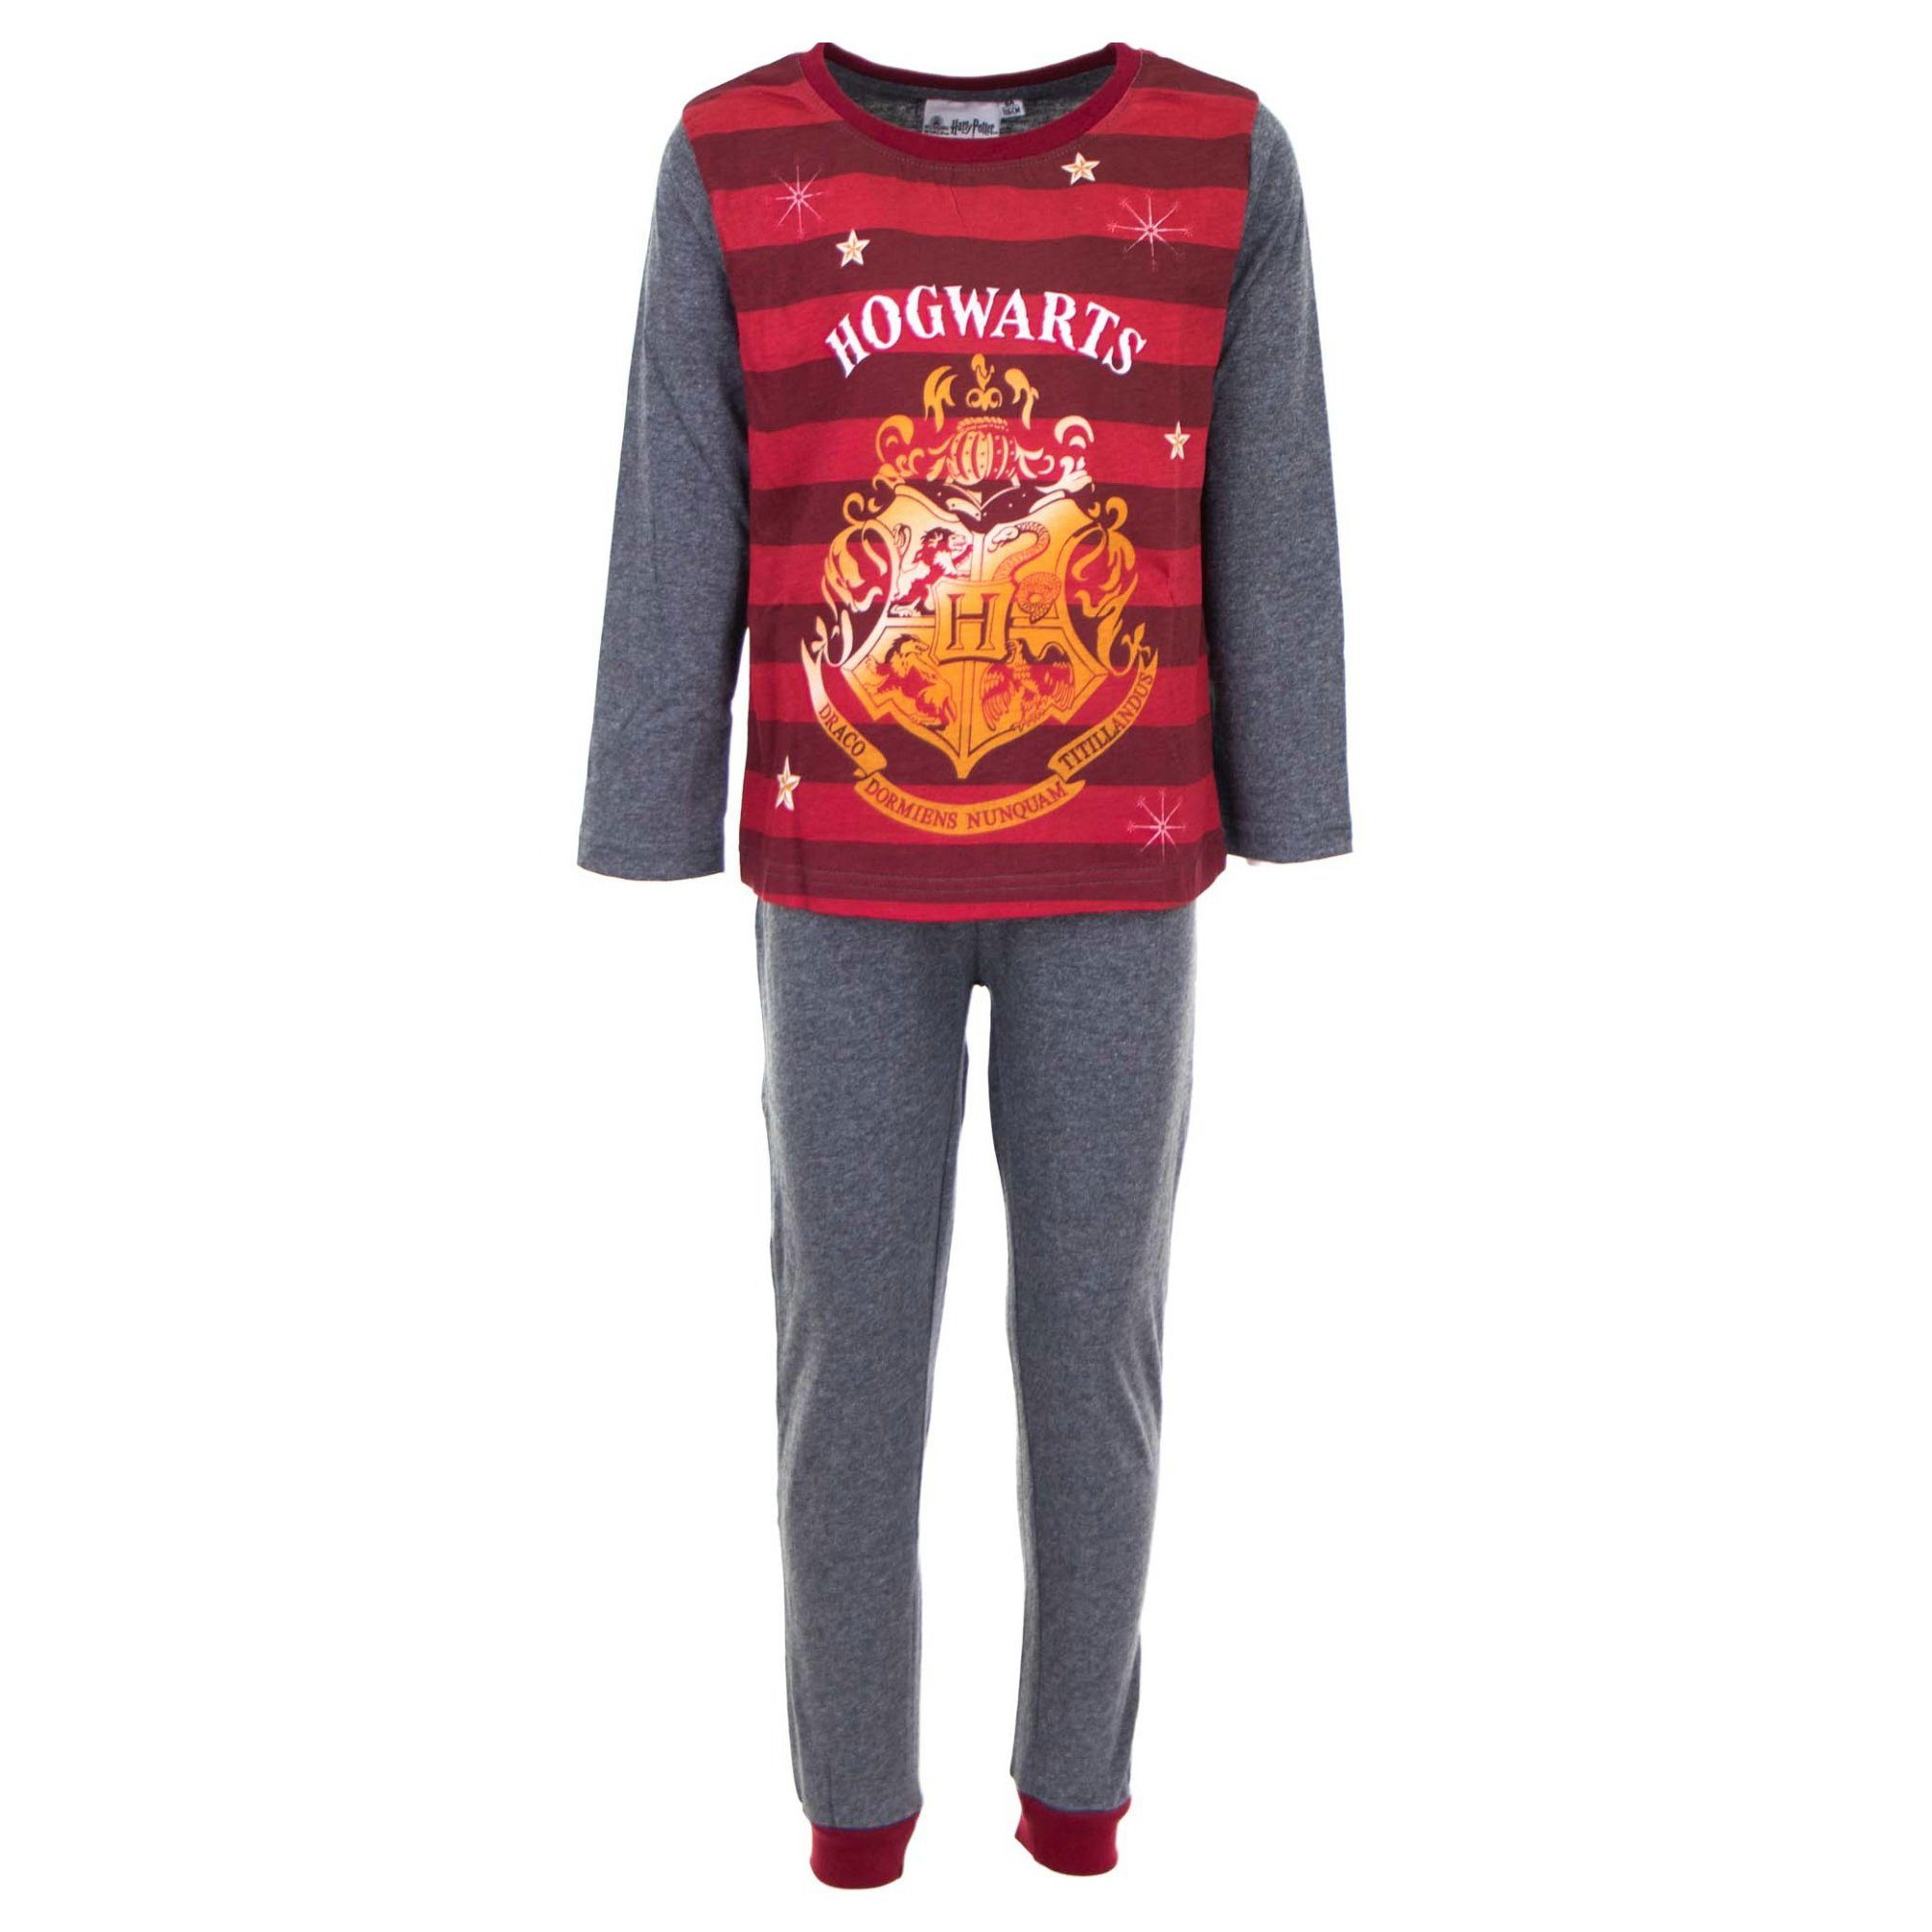 Harry Potter Schlafanzug Harry Potter Hogwarts Kinder Pyjama Gr. 98 - 128, 100% Baumwolle Grau